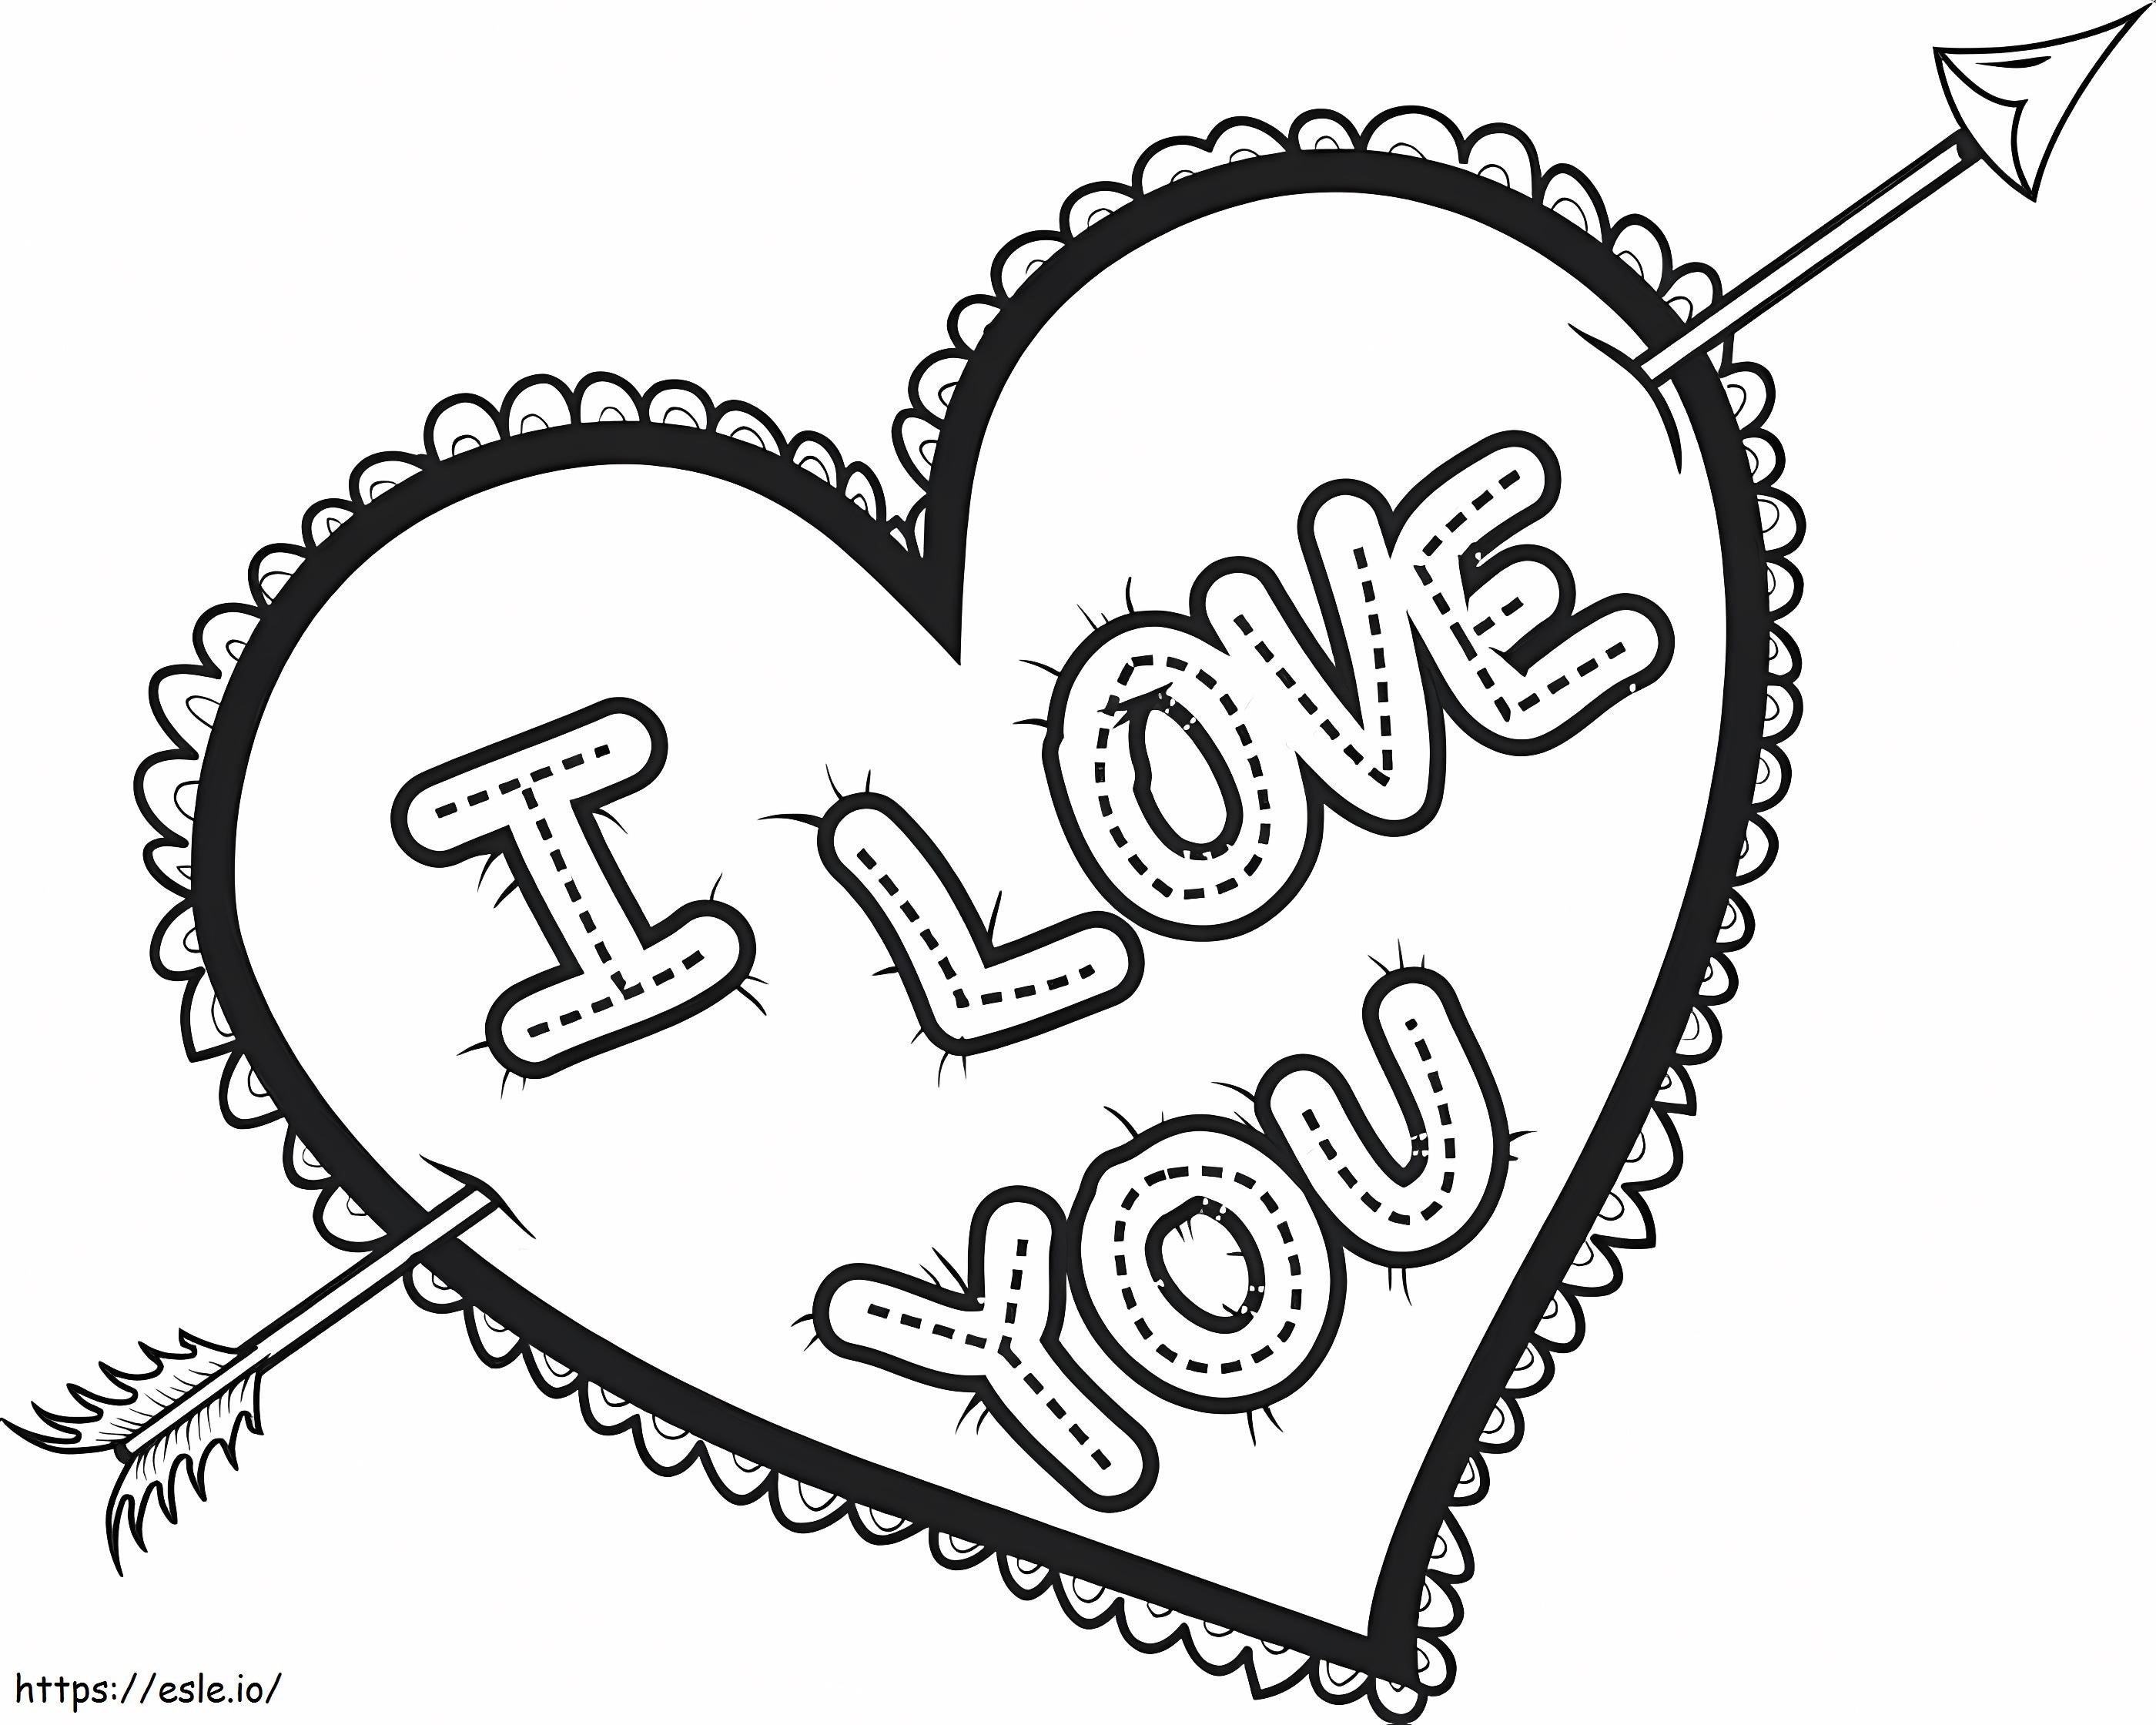 ILoveU Heart coloring page